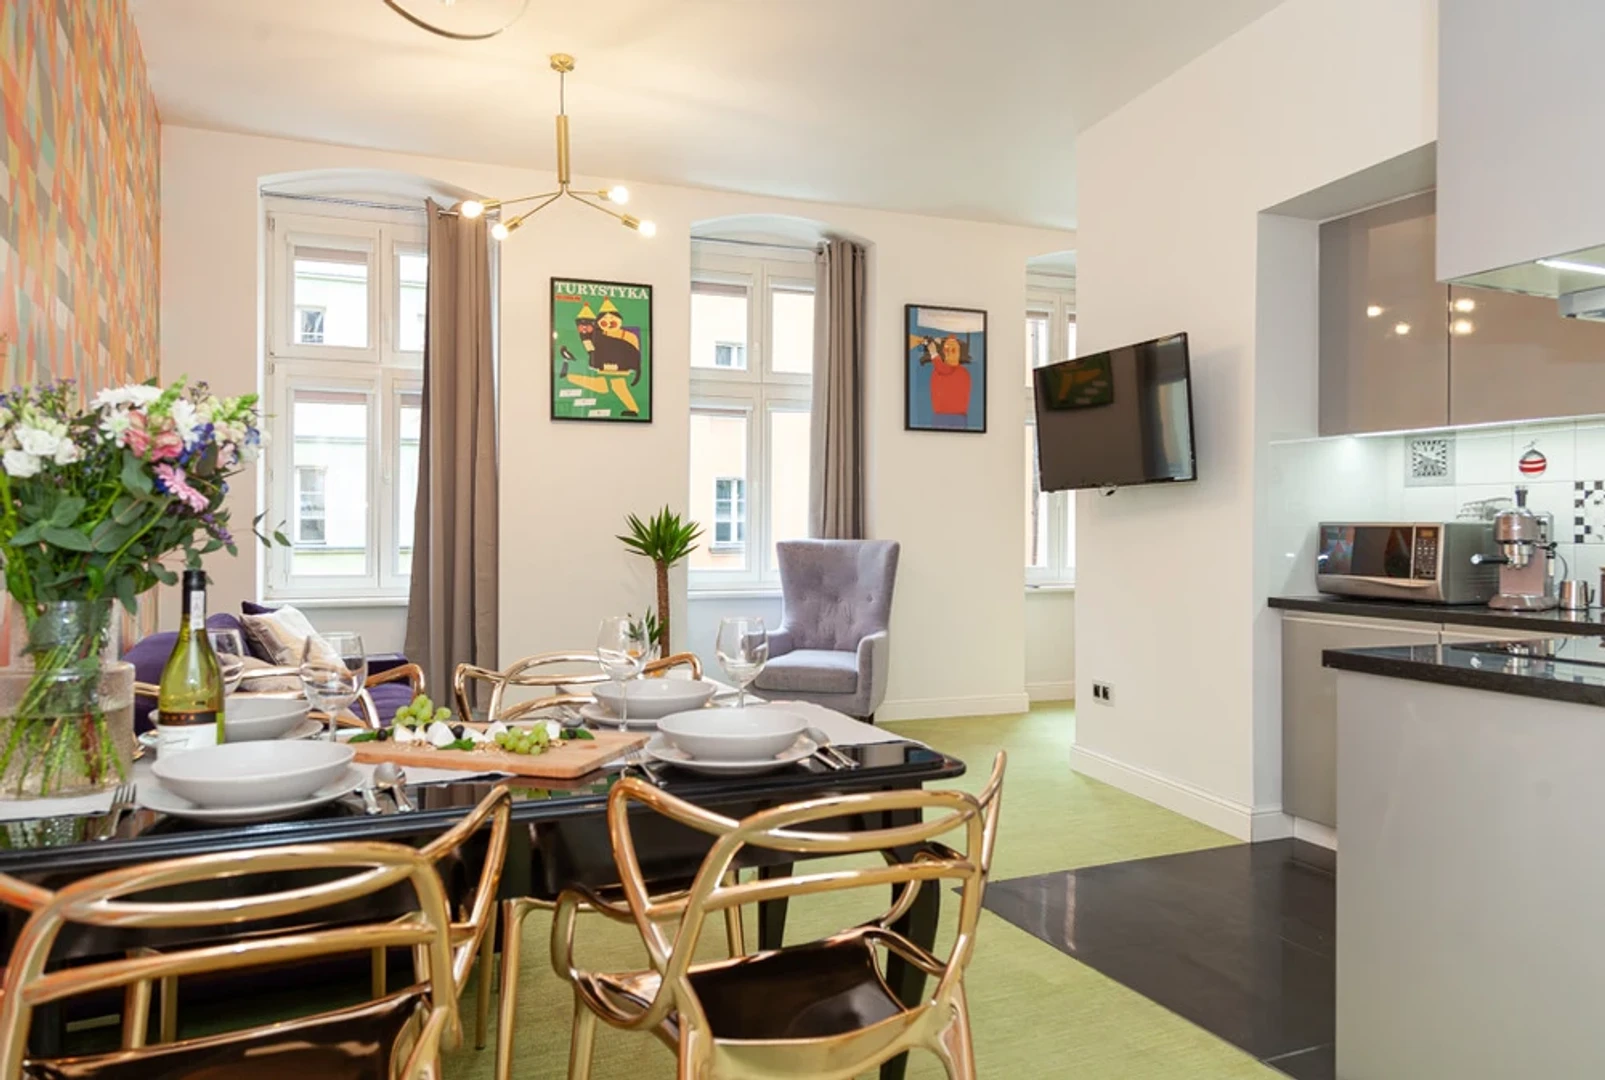 Entire fully furnished flat in Wroclaw